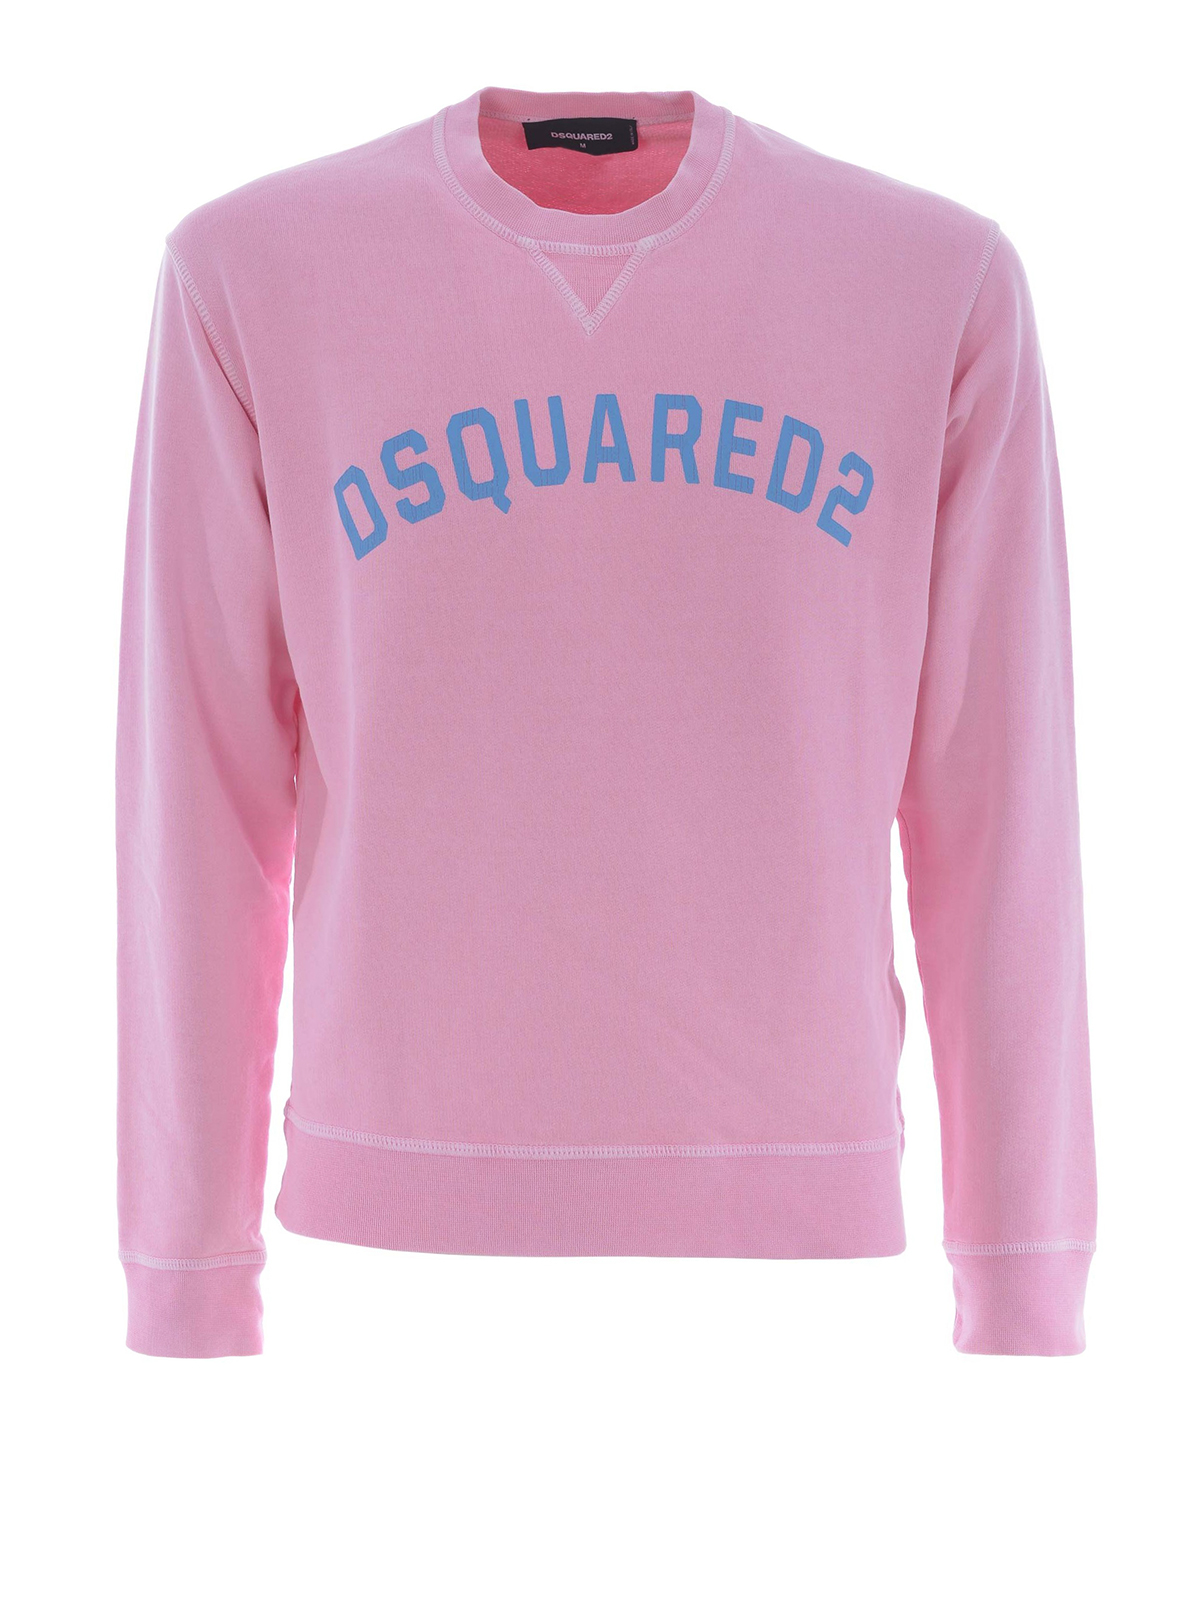 dsquared sweatshirt pink